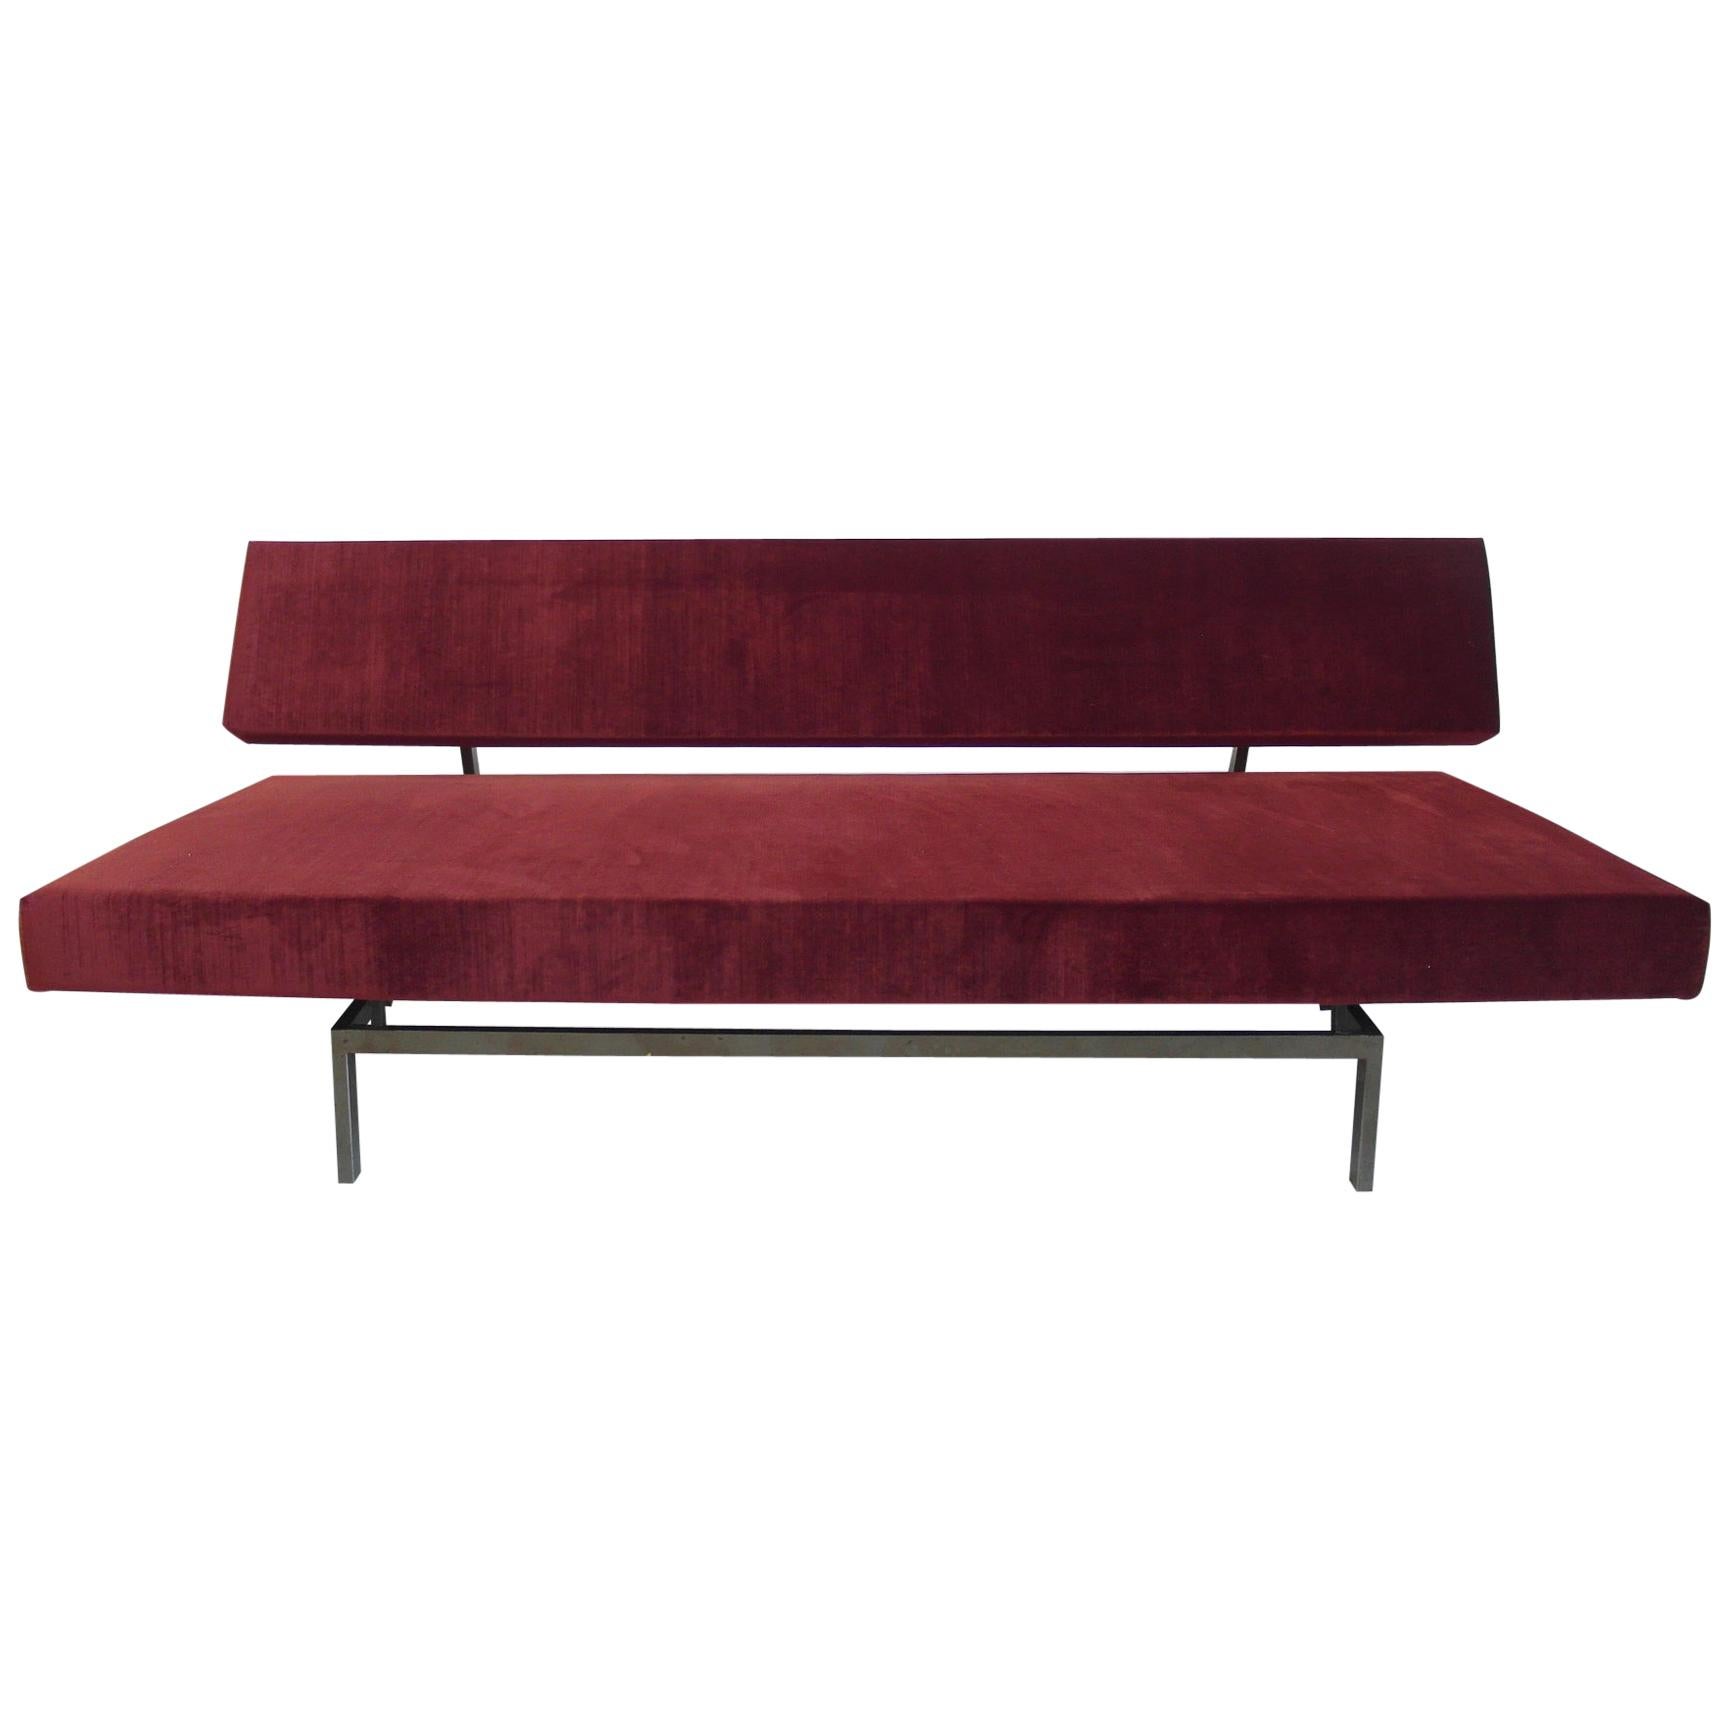 Martin Visser Streamline Sleeper Sofa / Daybed by Spectrum, the Netherlands 1960 For Sale